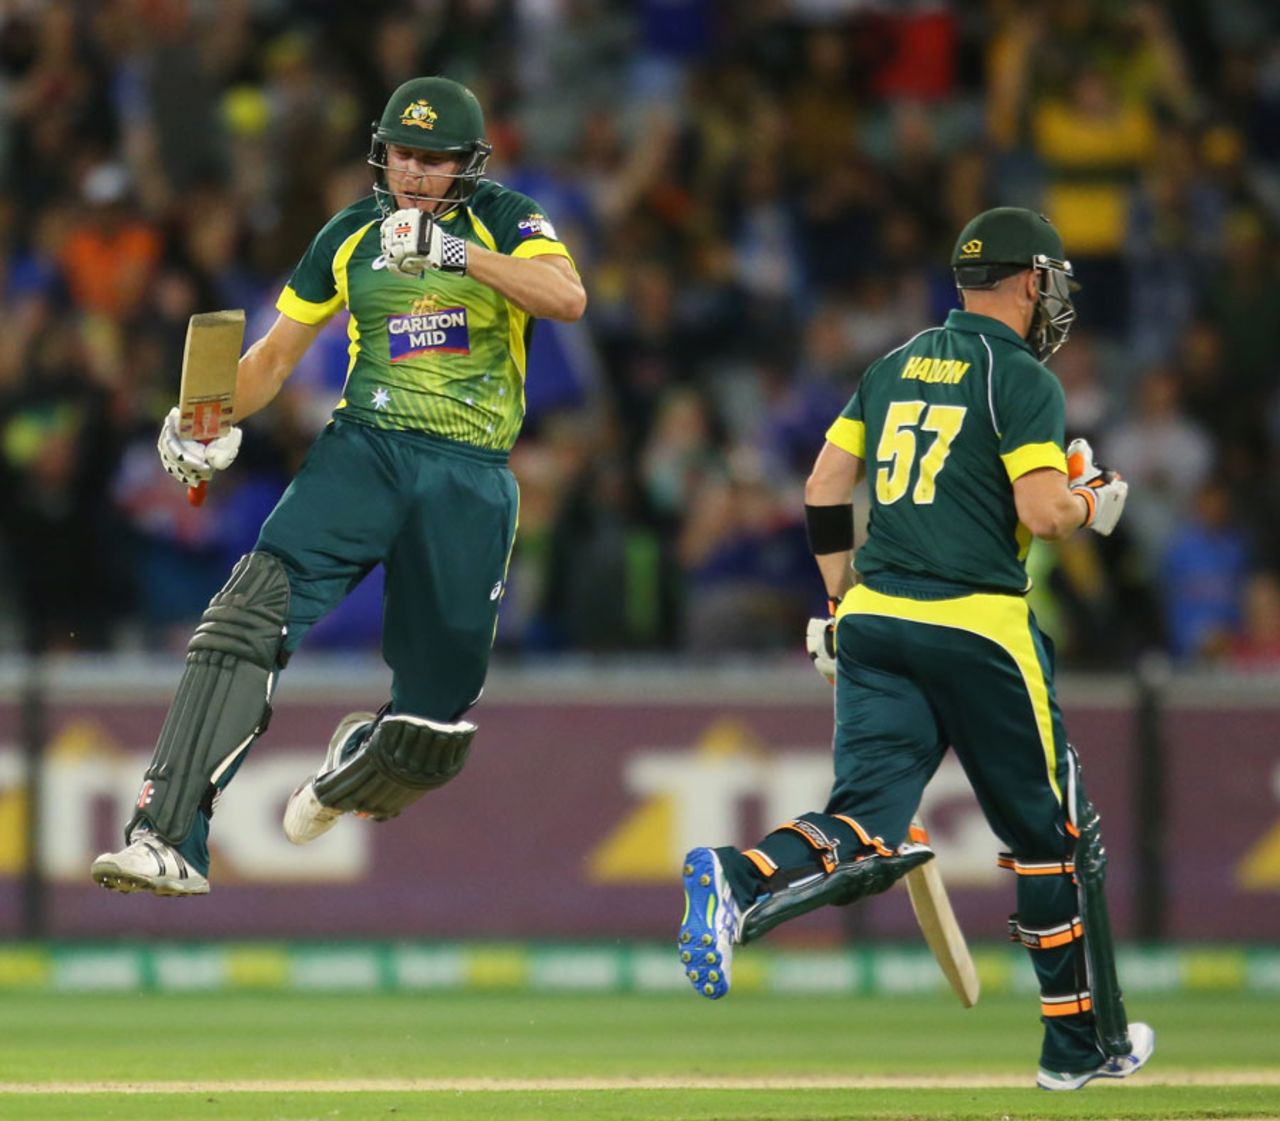 James Faulkner leaps in joy after hitting the winning runs, Australia v India, Carlton Mid Tri-series, Melbourne, January 18, 2015